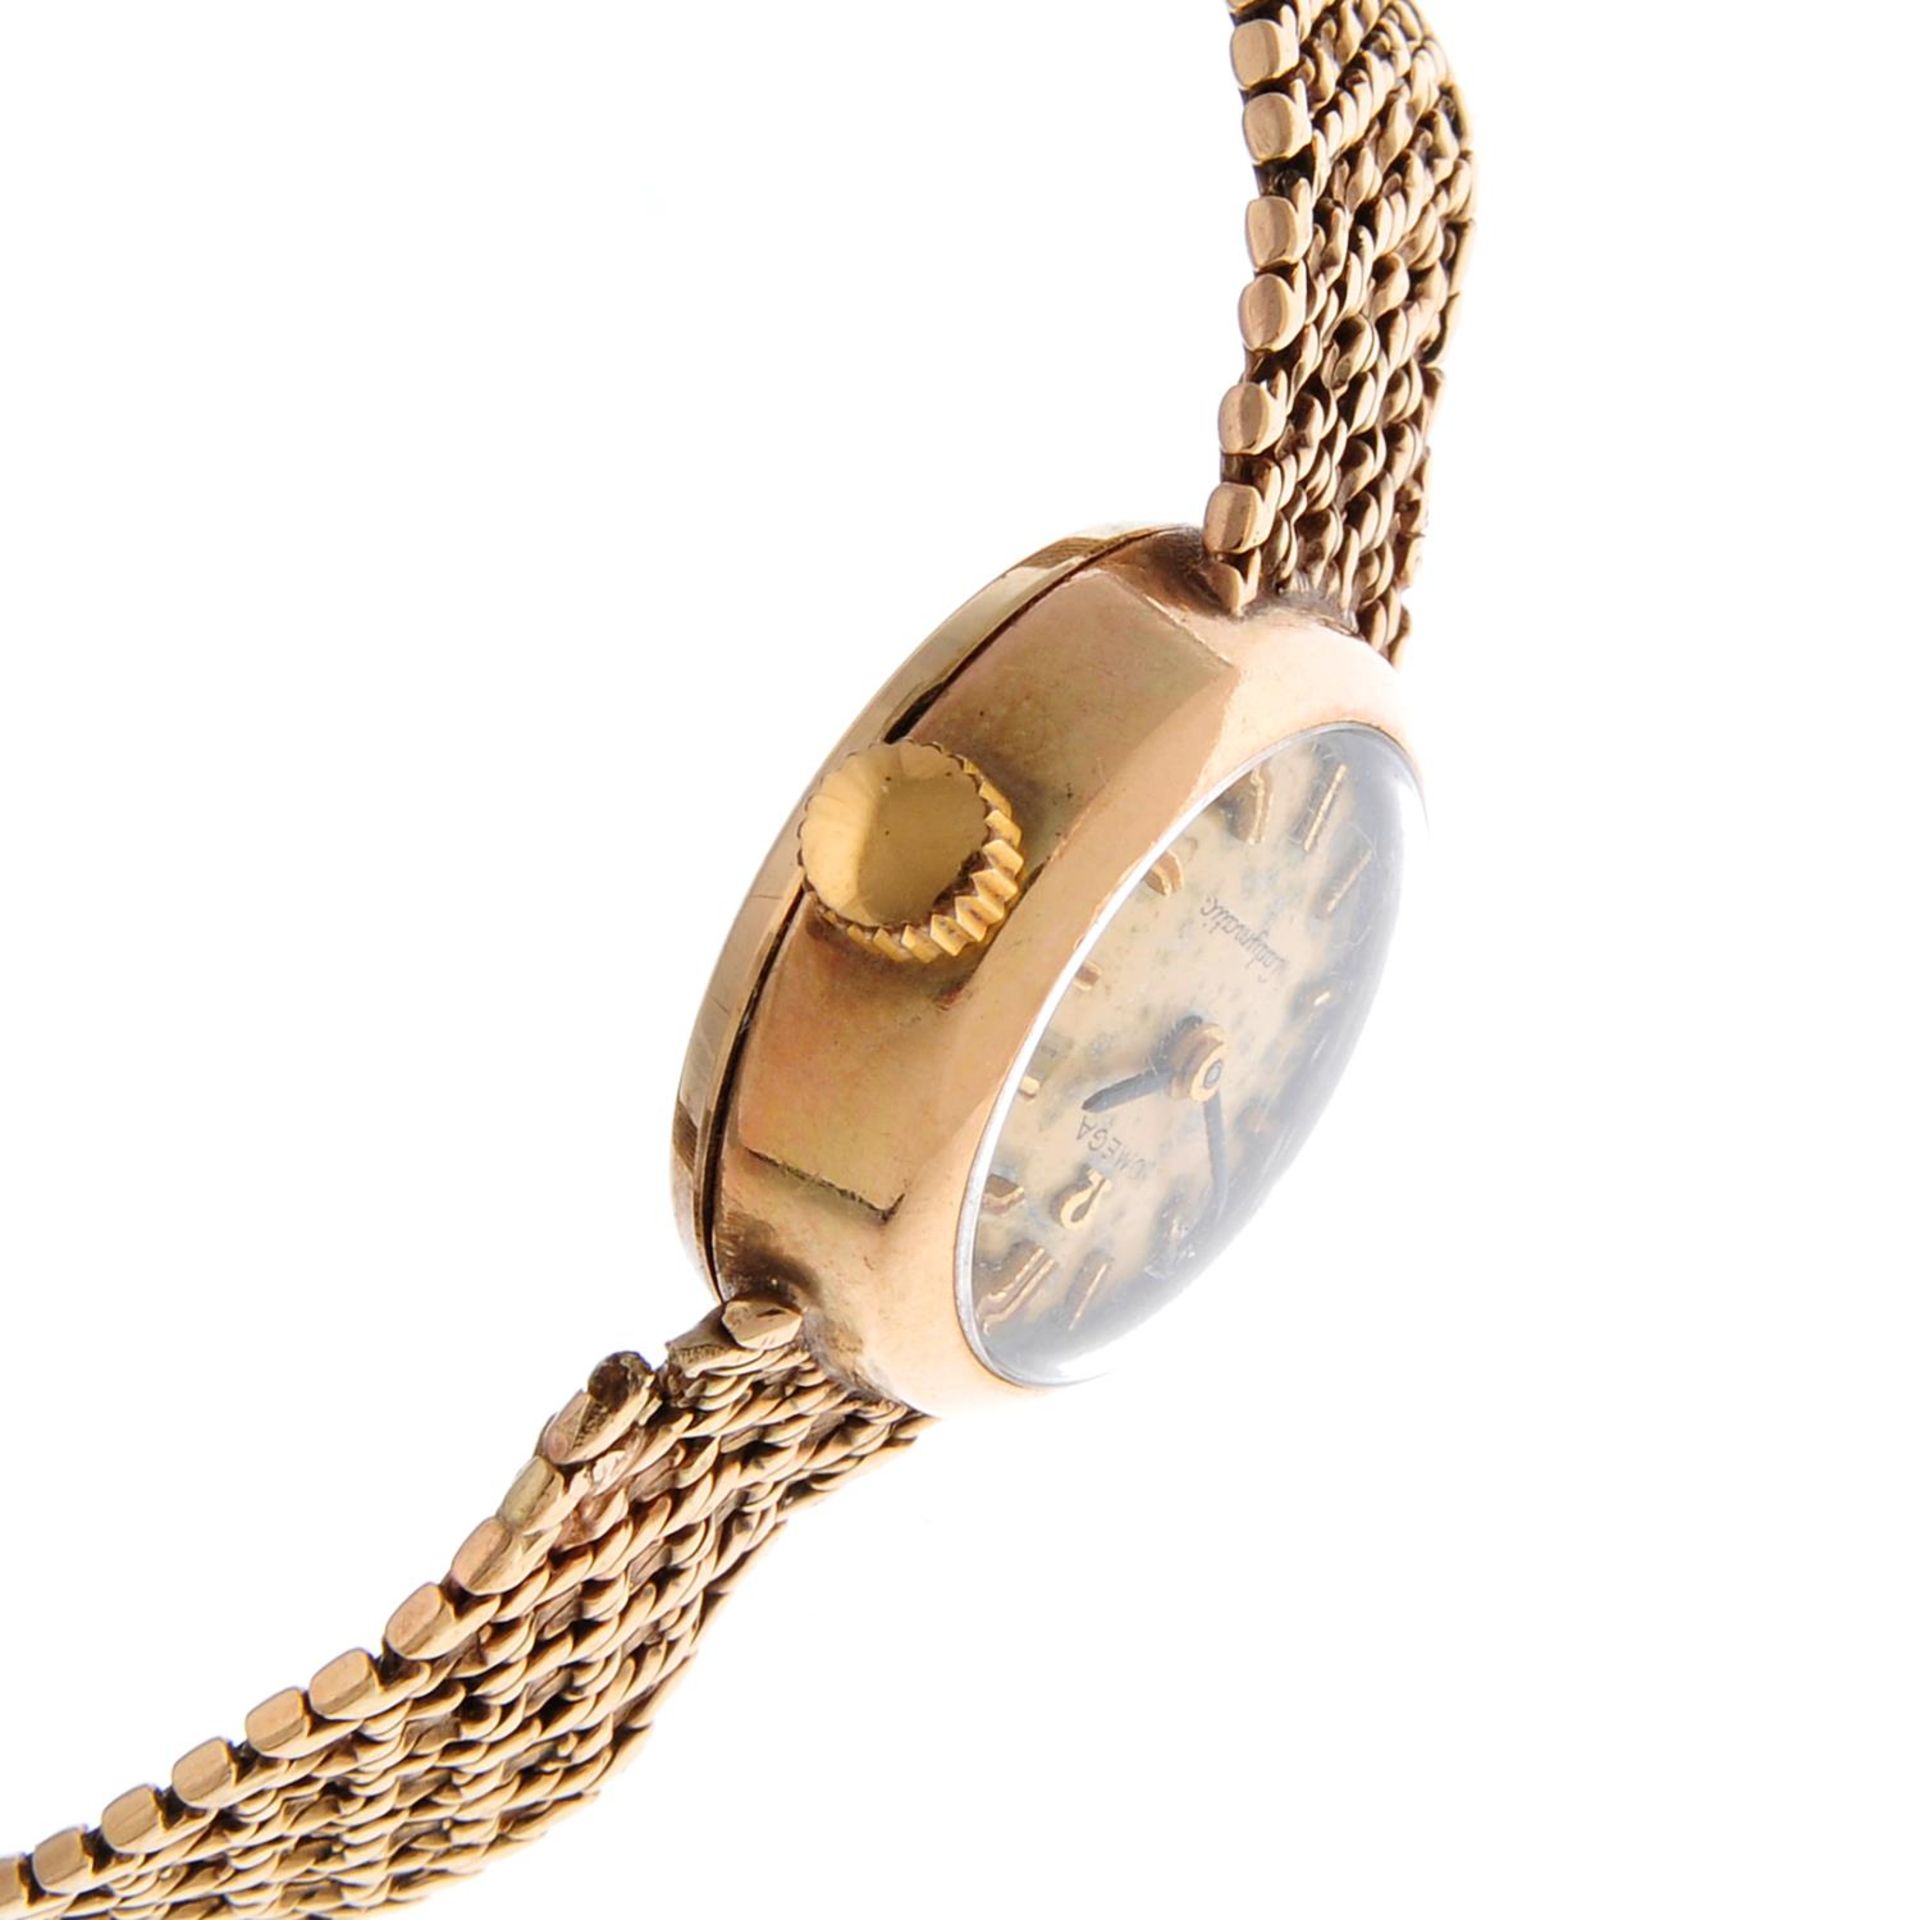 OMEGA - a Ladymatic bracelet watch. - Image 3 of 4